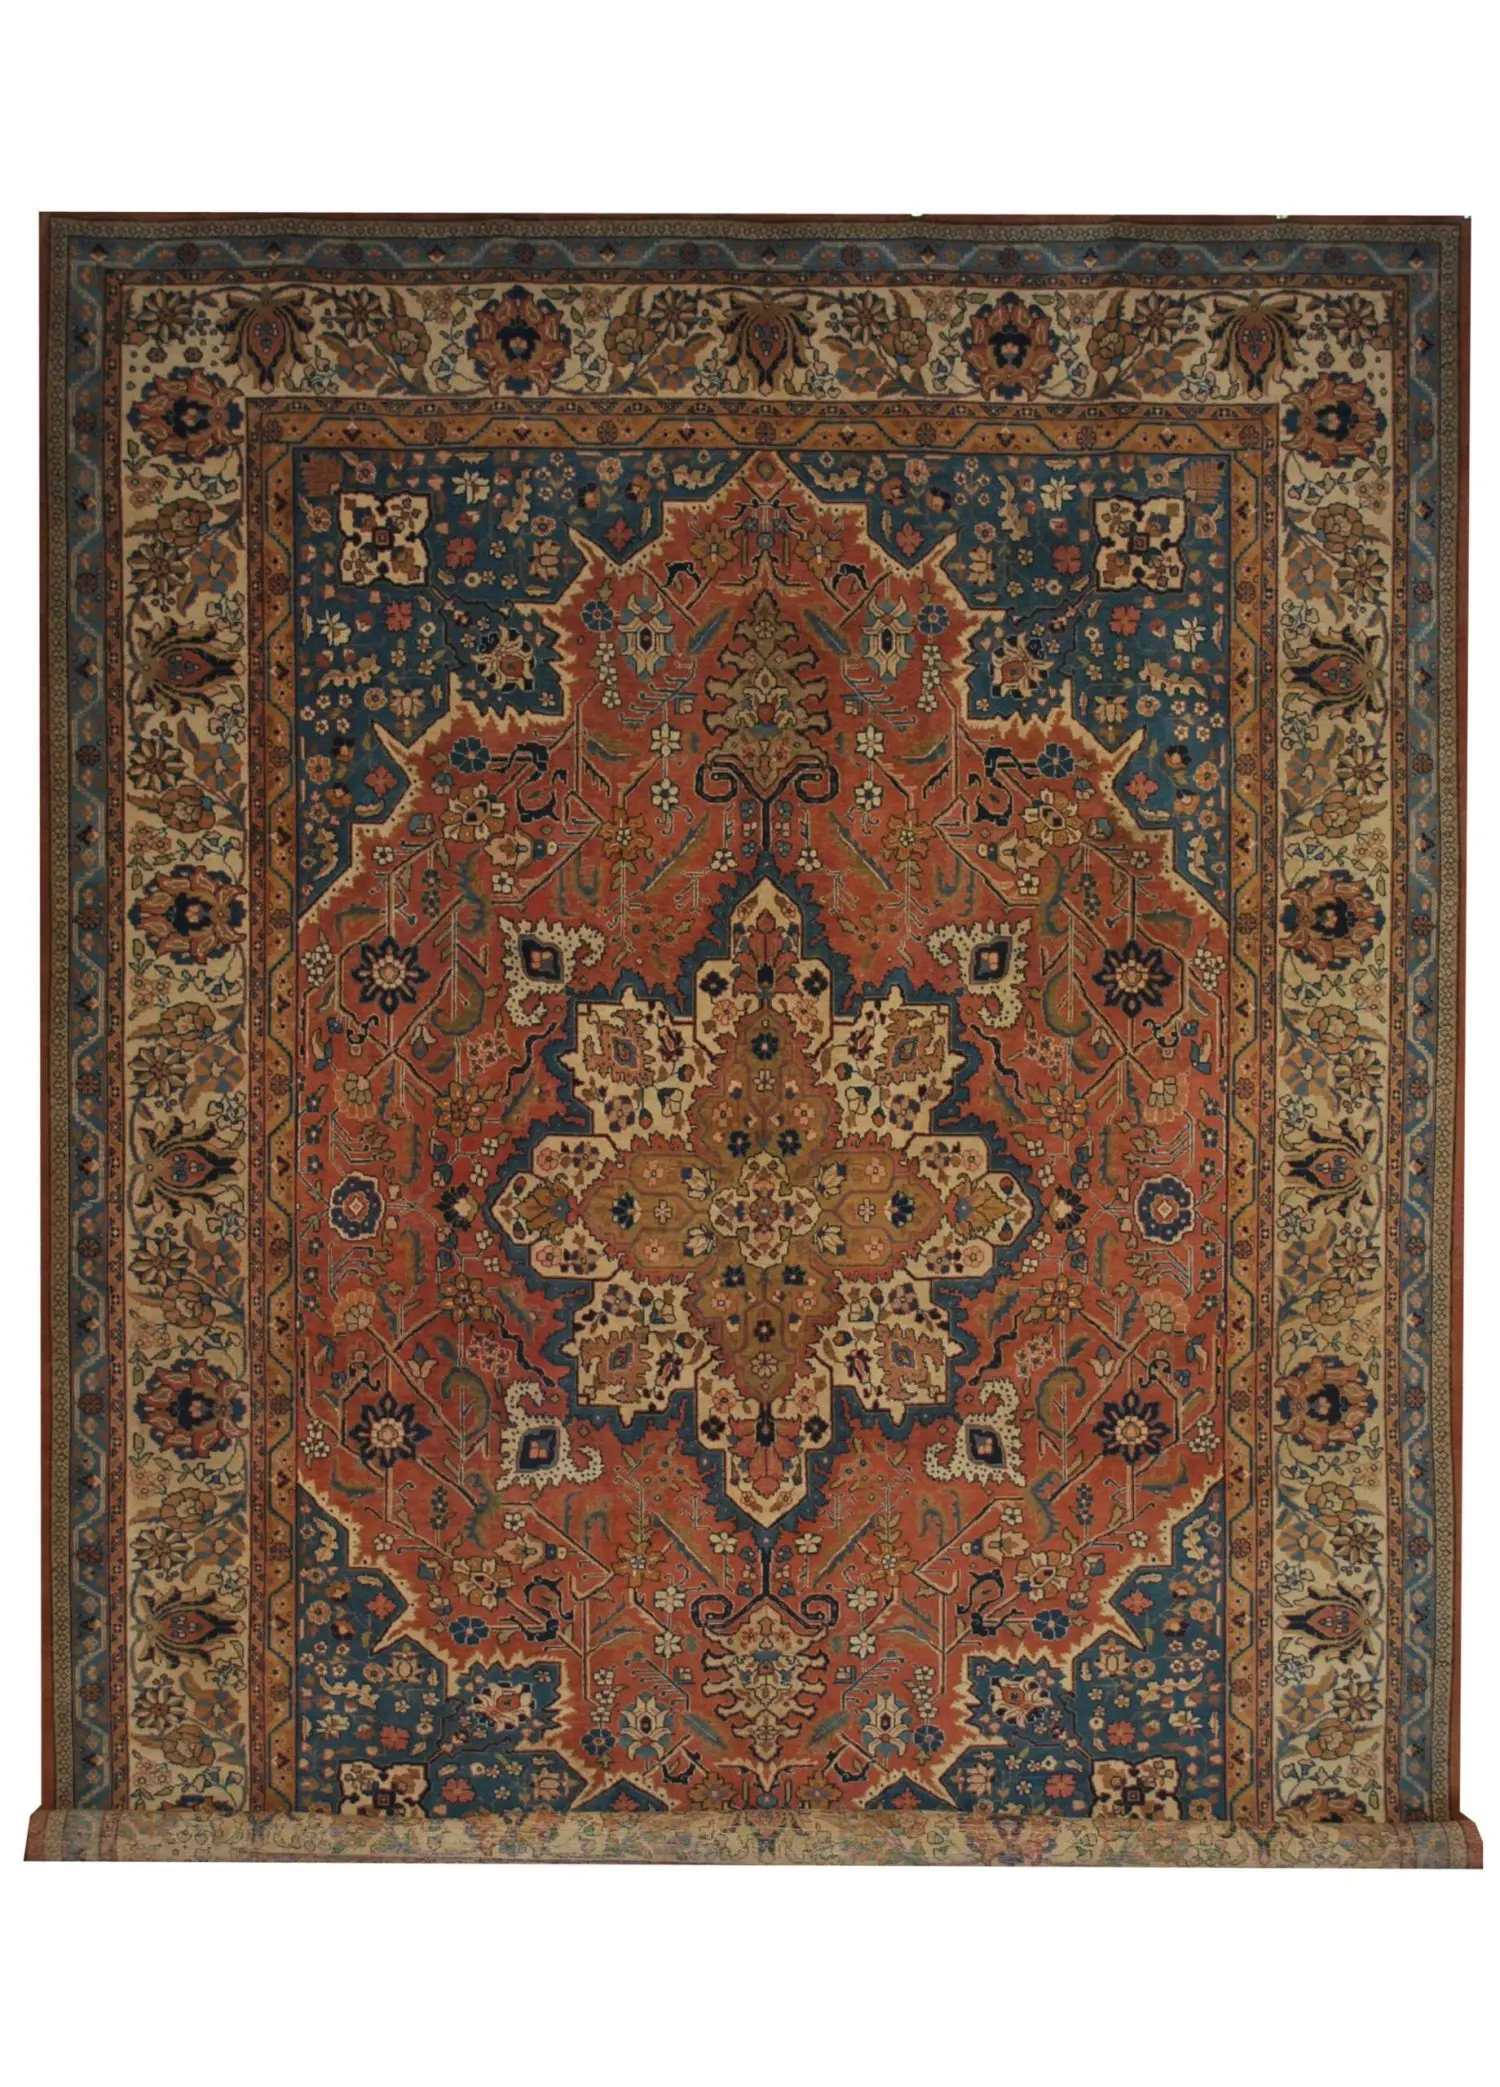 Antique Persian Khoy 8' 6" x 11' 1" Handmade Area Rug - Shabahang Royal Carpet